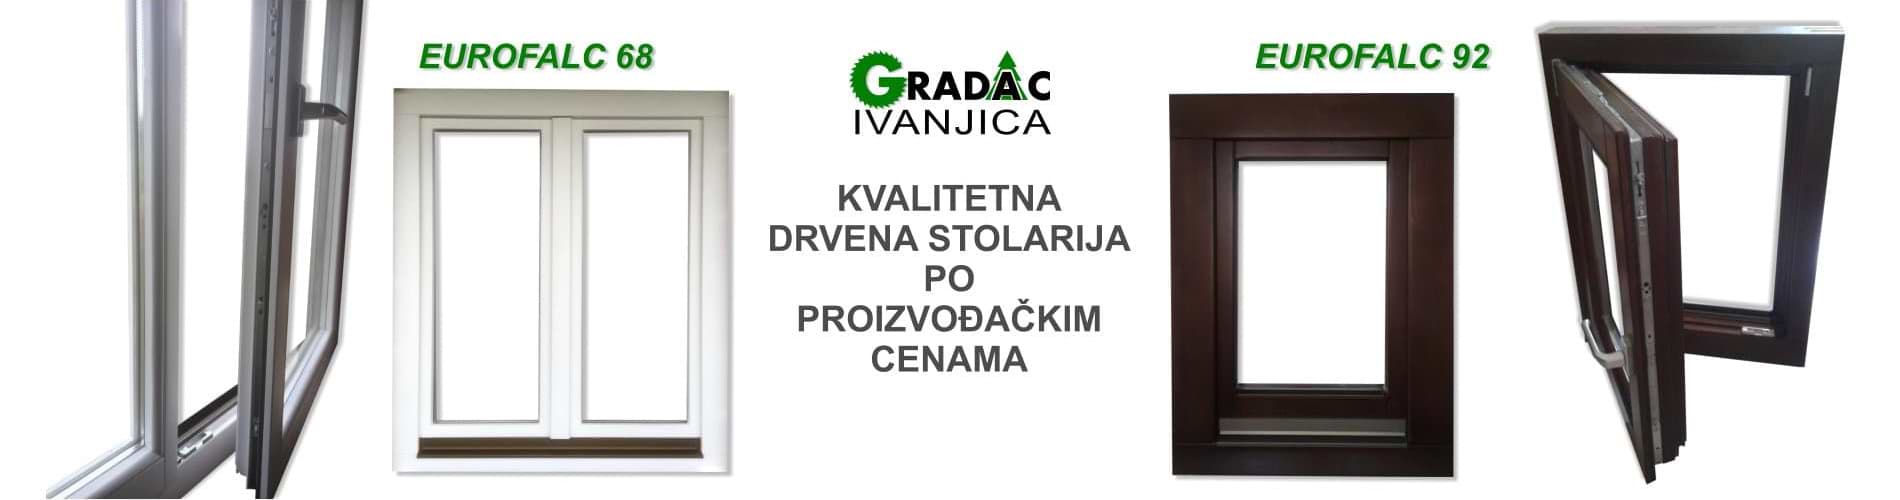 Kvalitetna drvena stolarija - Gradac, Ivanjica